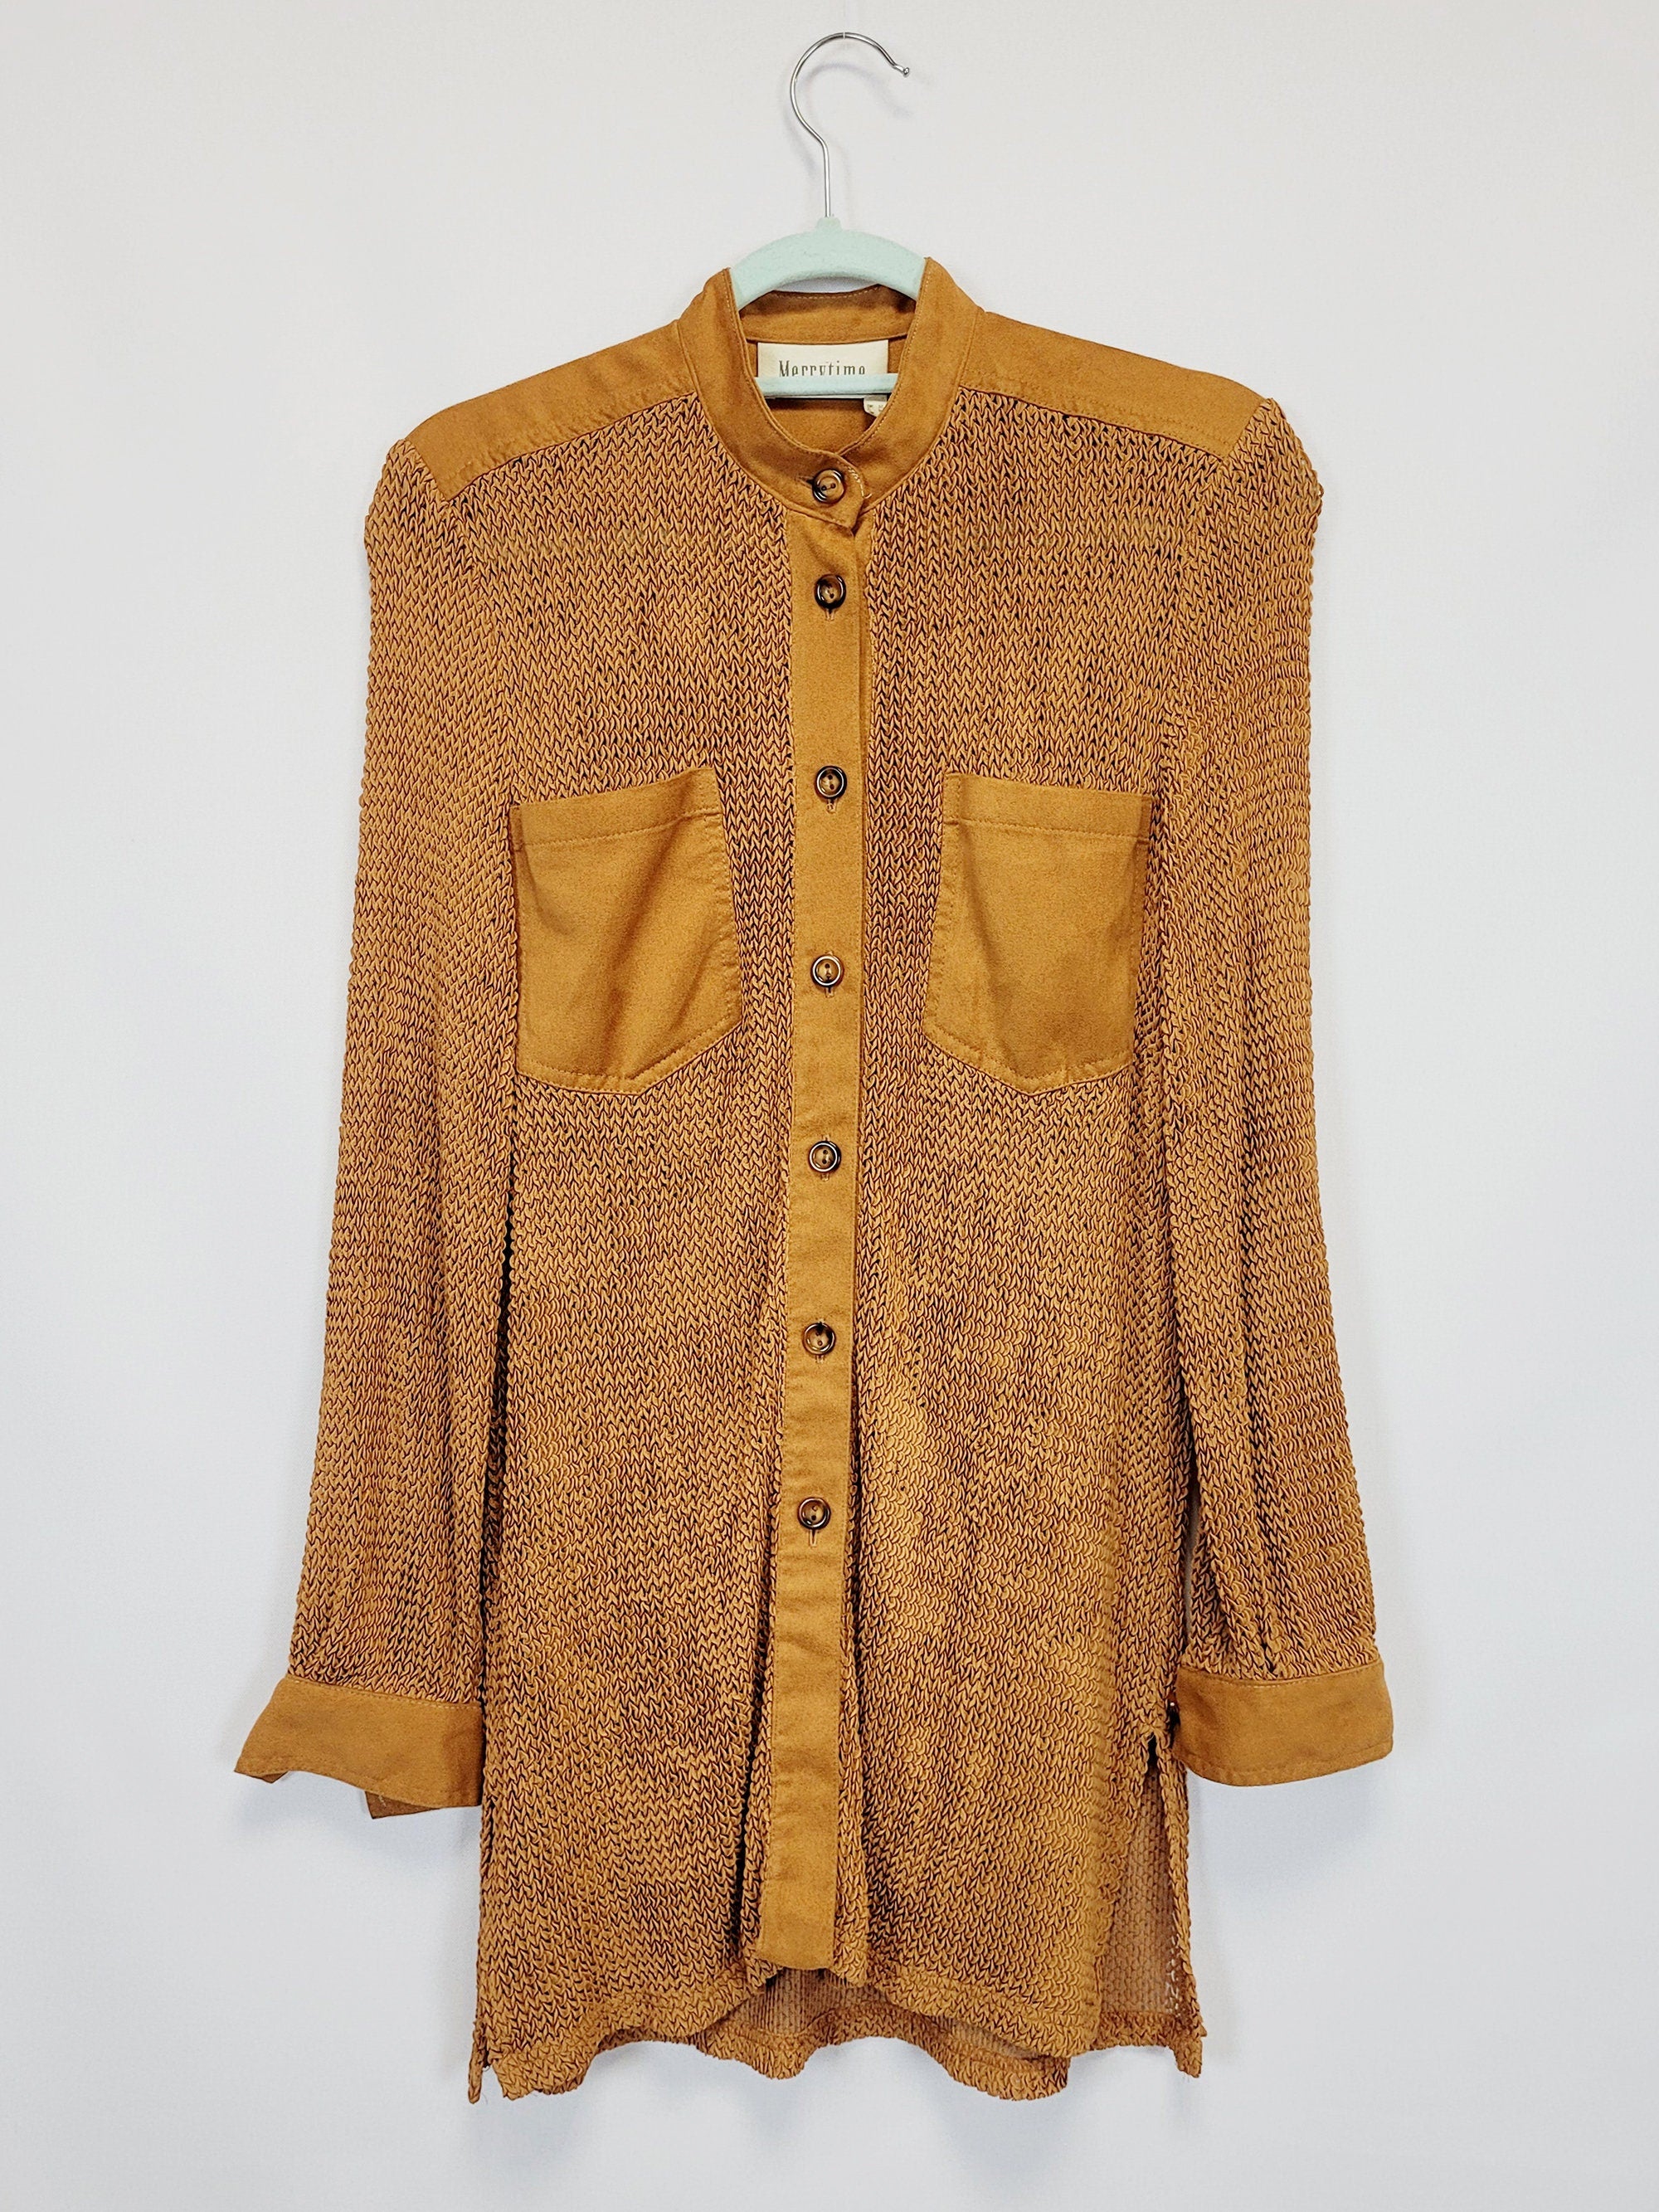 90s brown knit imitation minimalist long shirt top